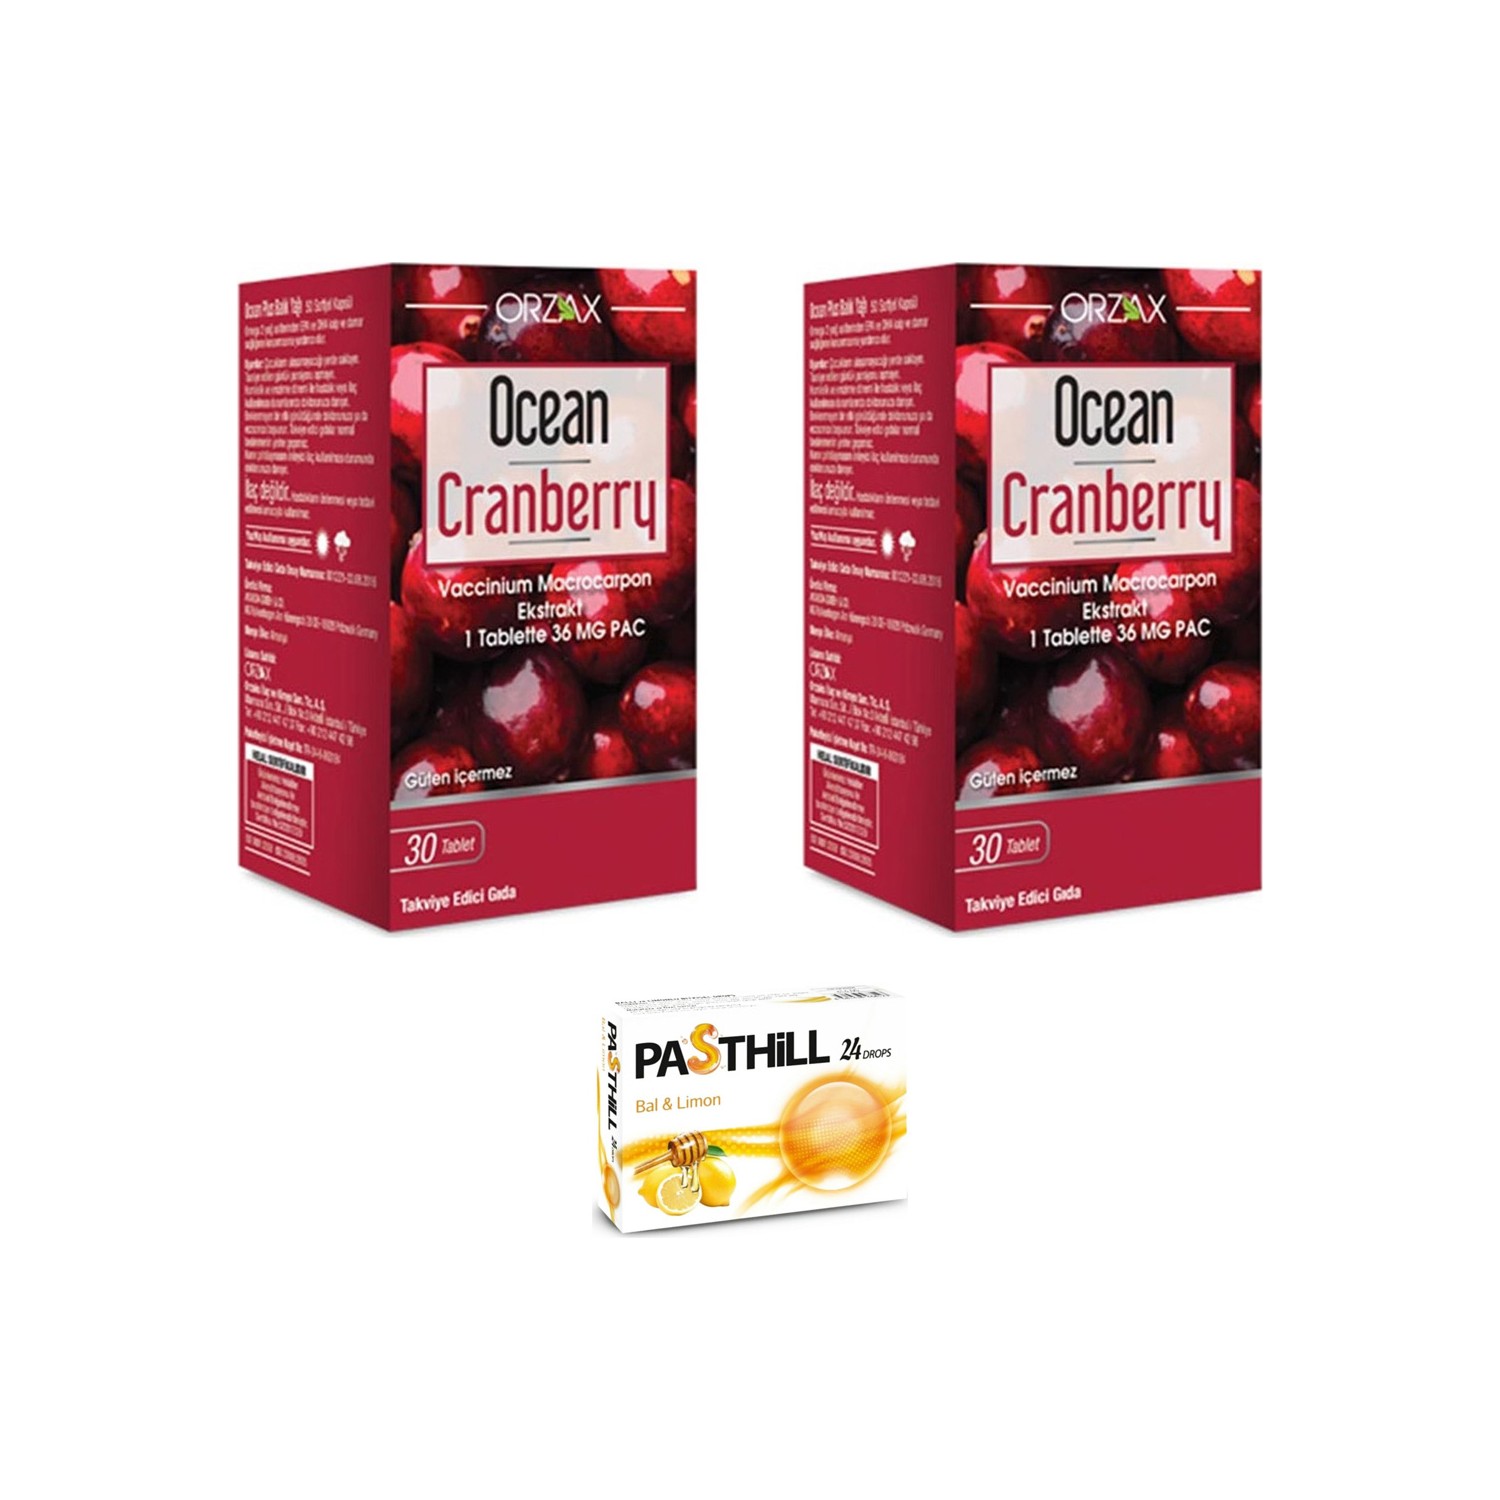 Пищевая добавка Orzax Ocean Cranberry, 2 упаковки по 30 таблеток + Пастилки Pasthill со вкусом меда и лимона